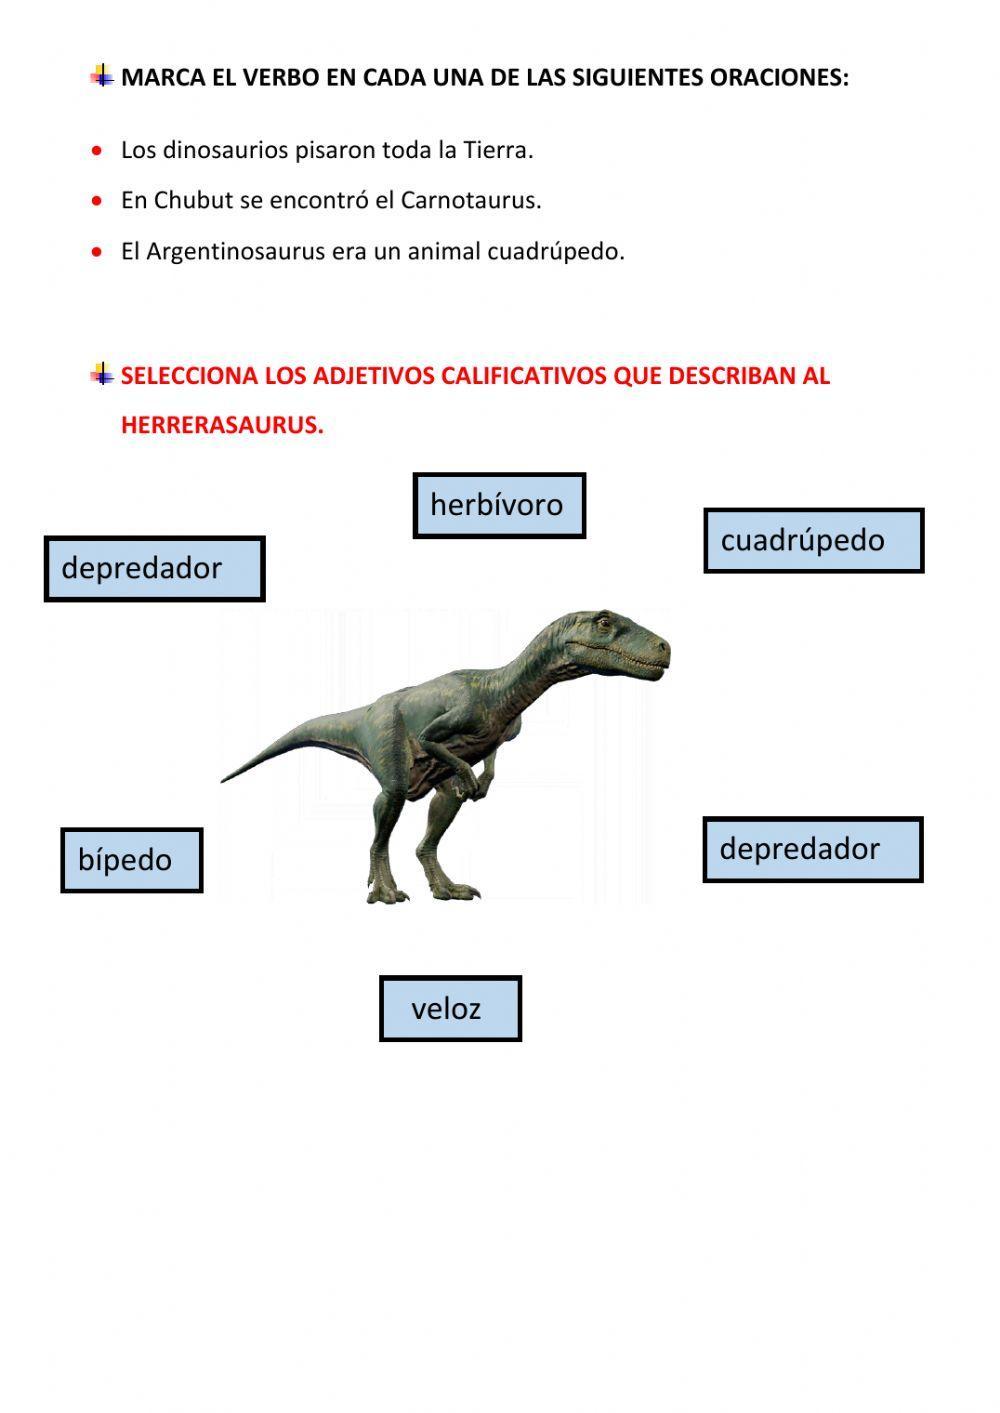 Dinosaurios bien argentinos